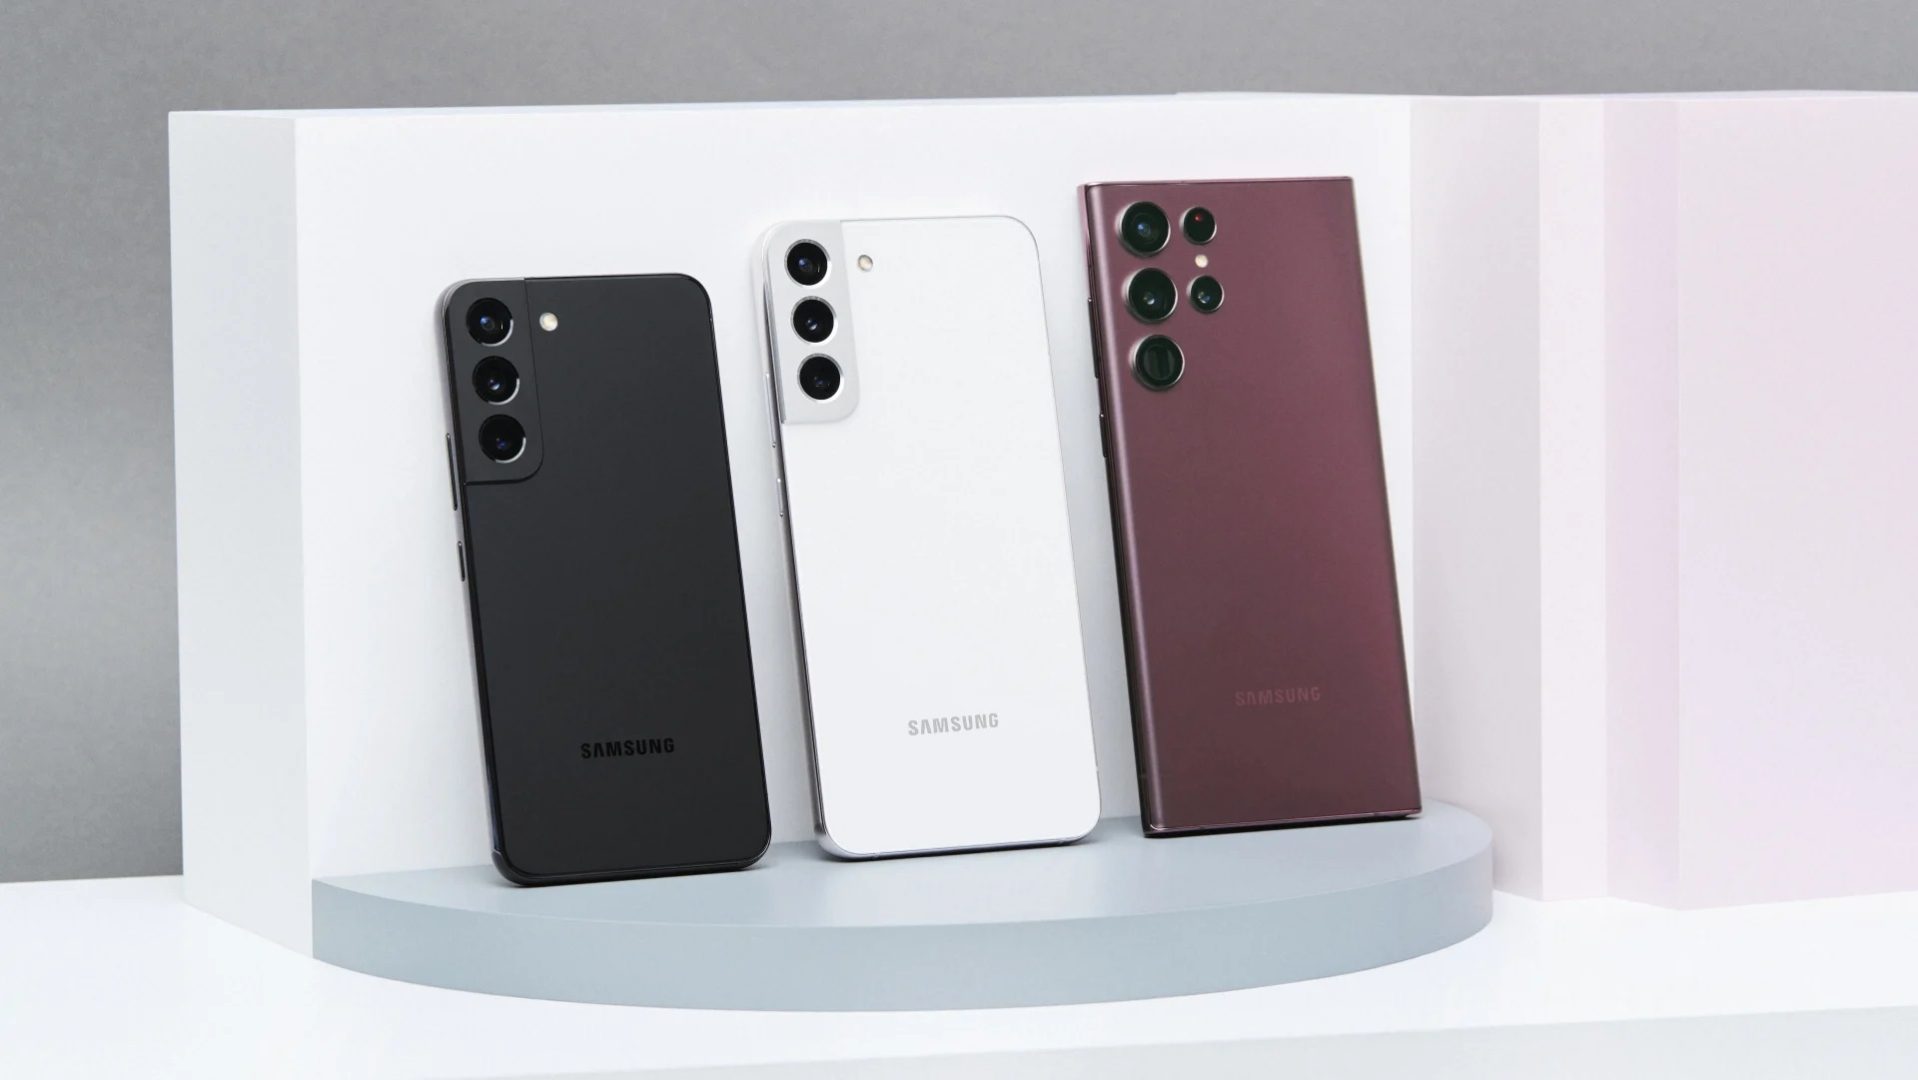 Samsung Galaxy S22 Serisi